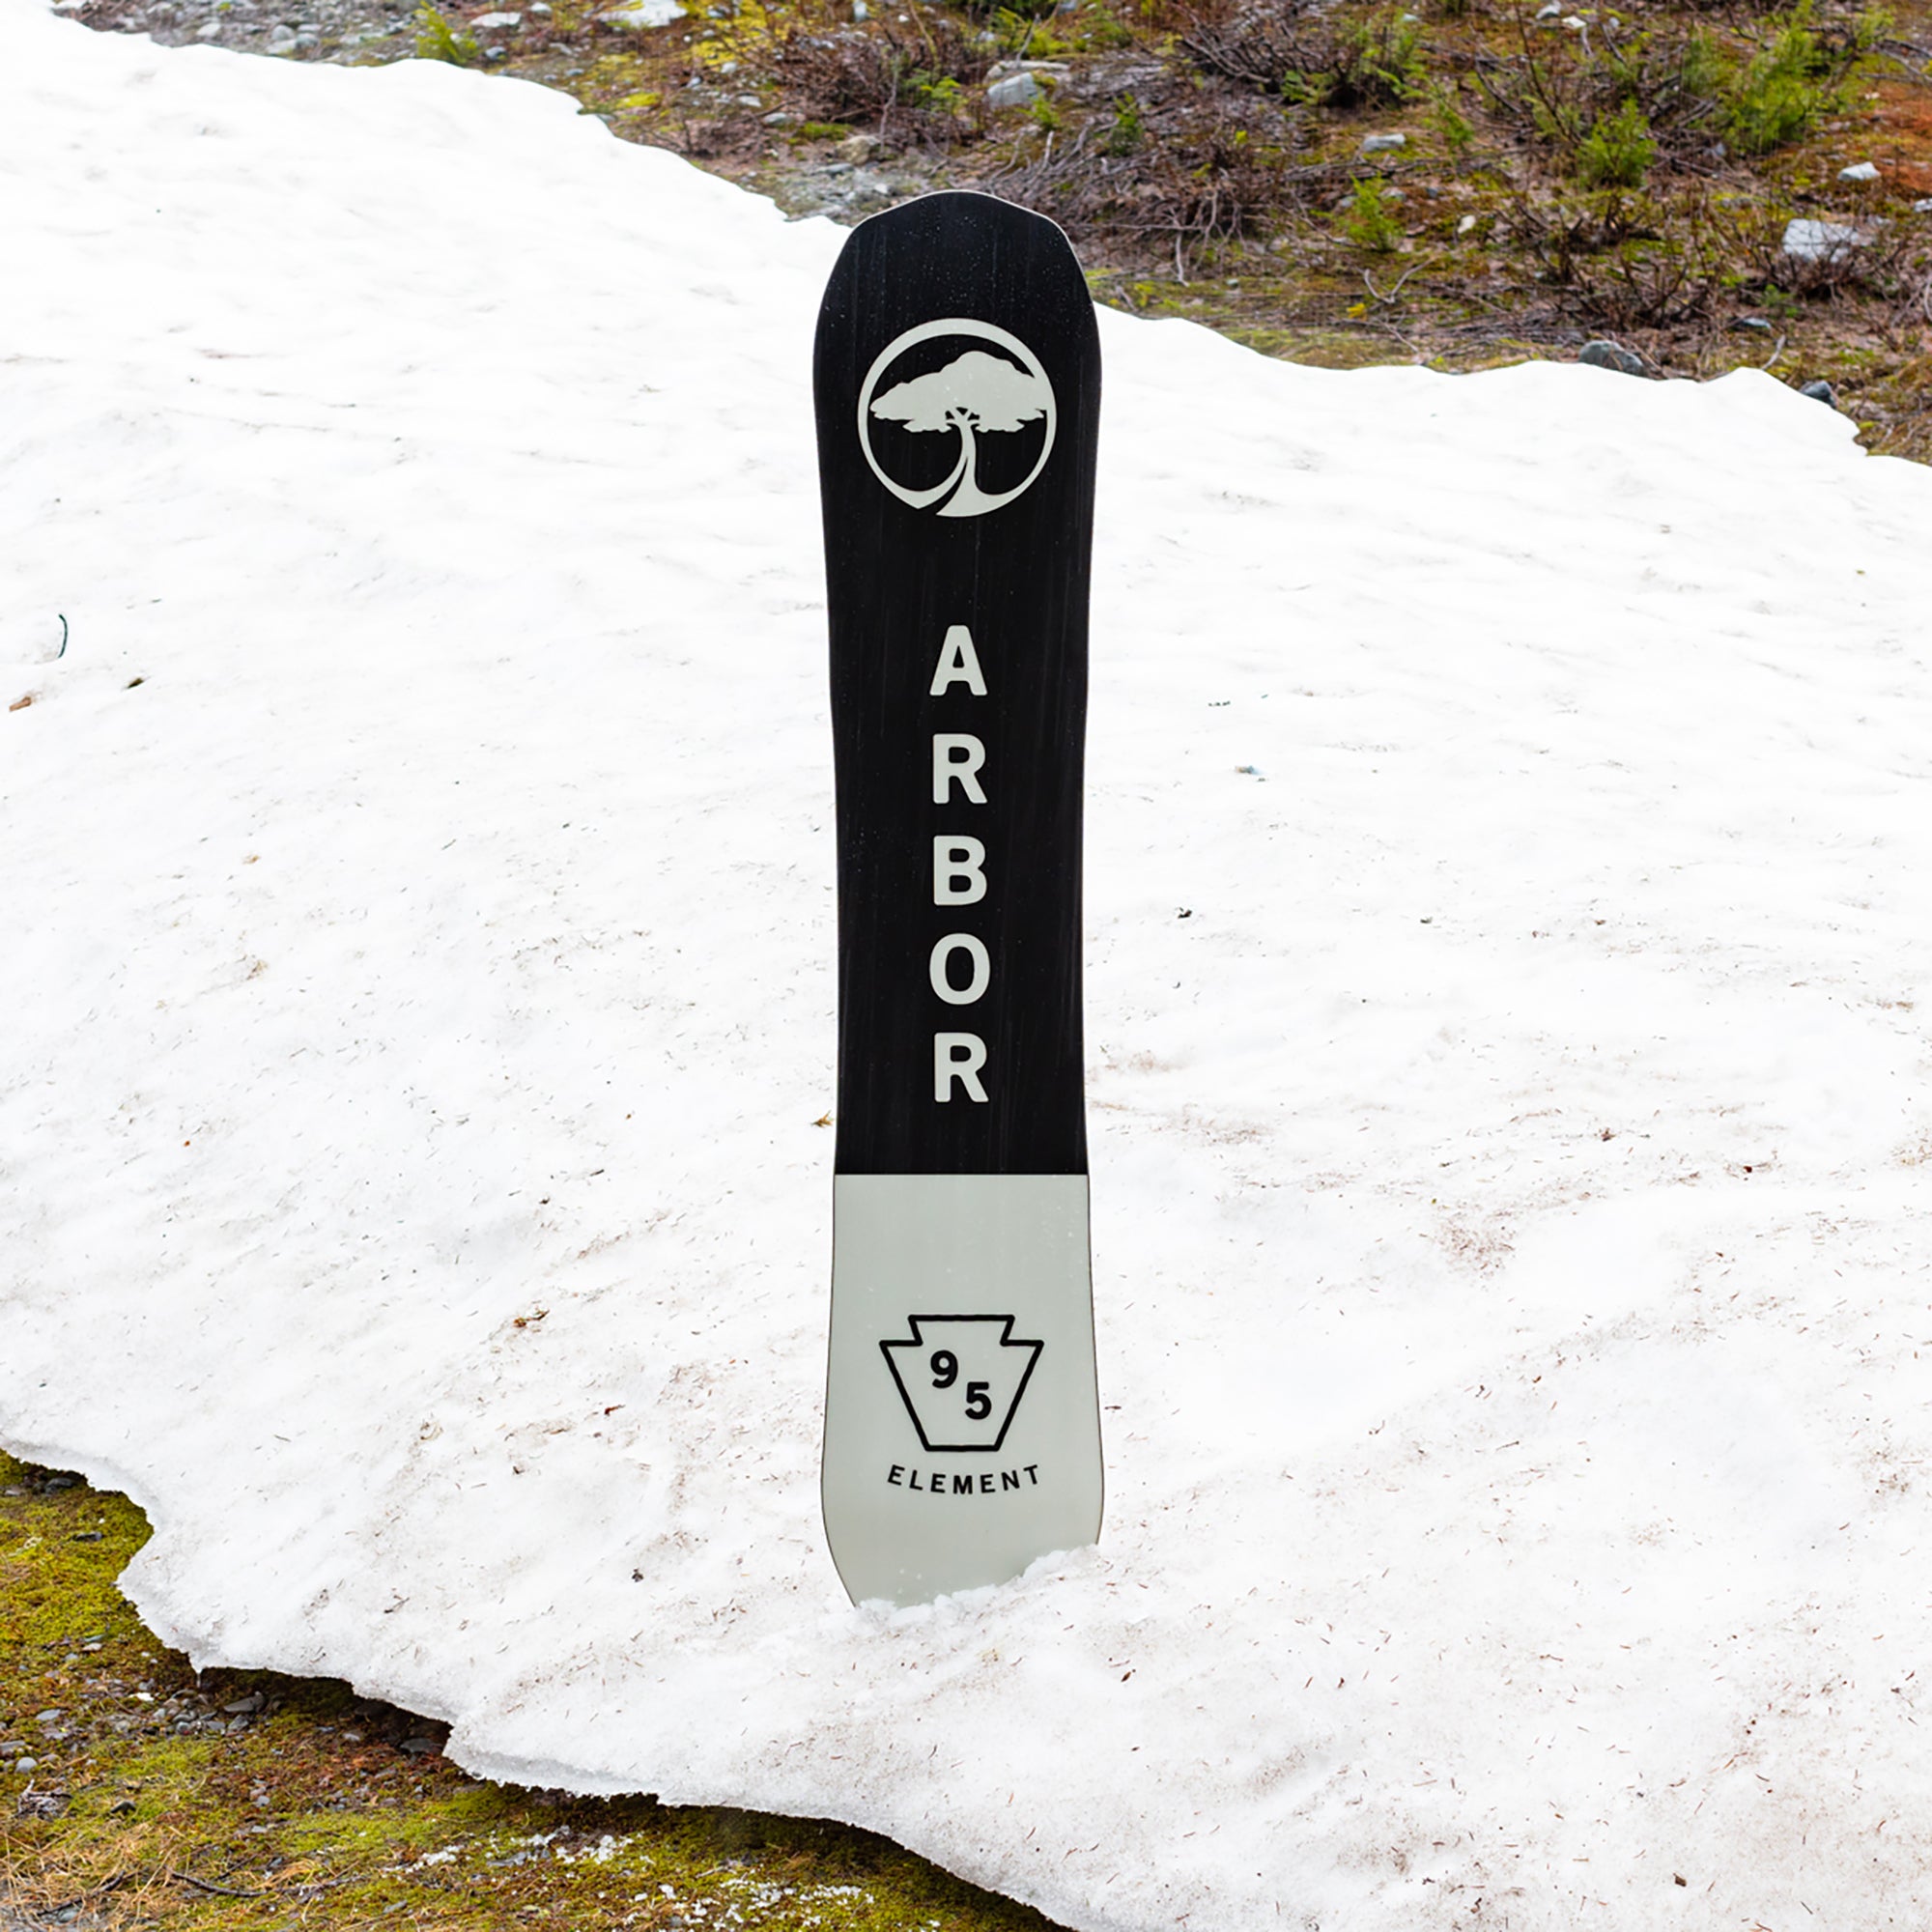 Arbor Men's Element Camber Snowboard 2024